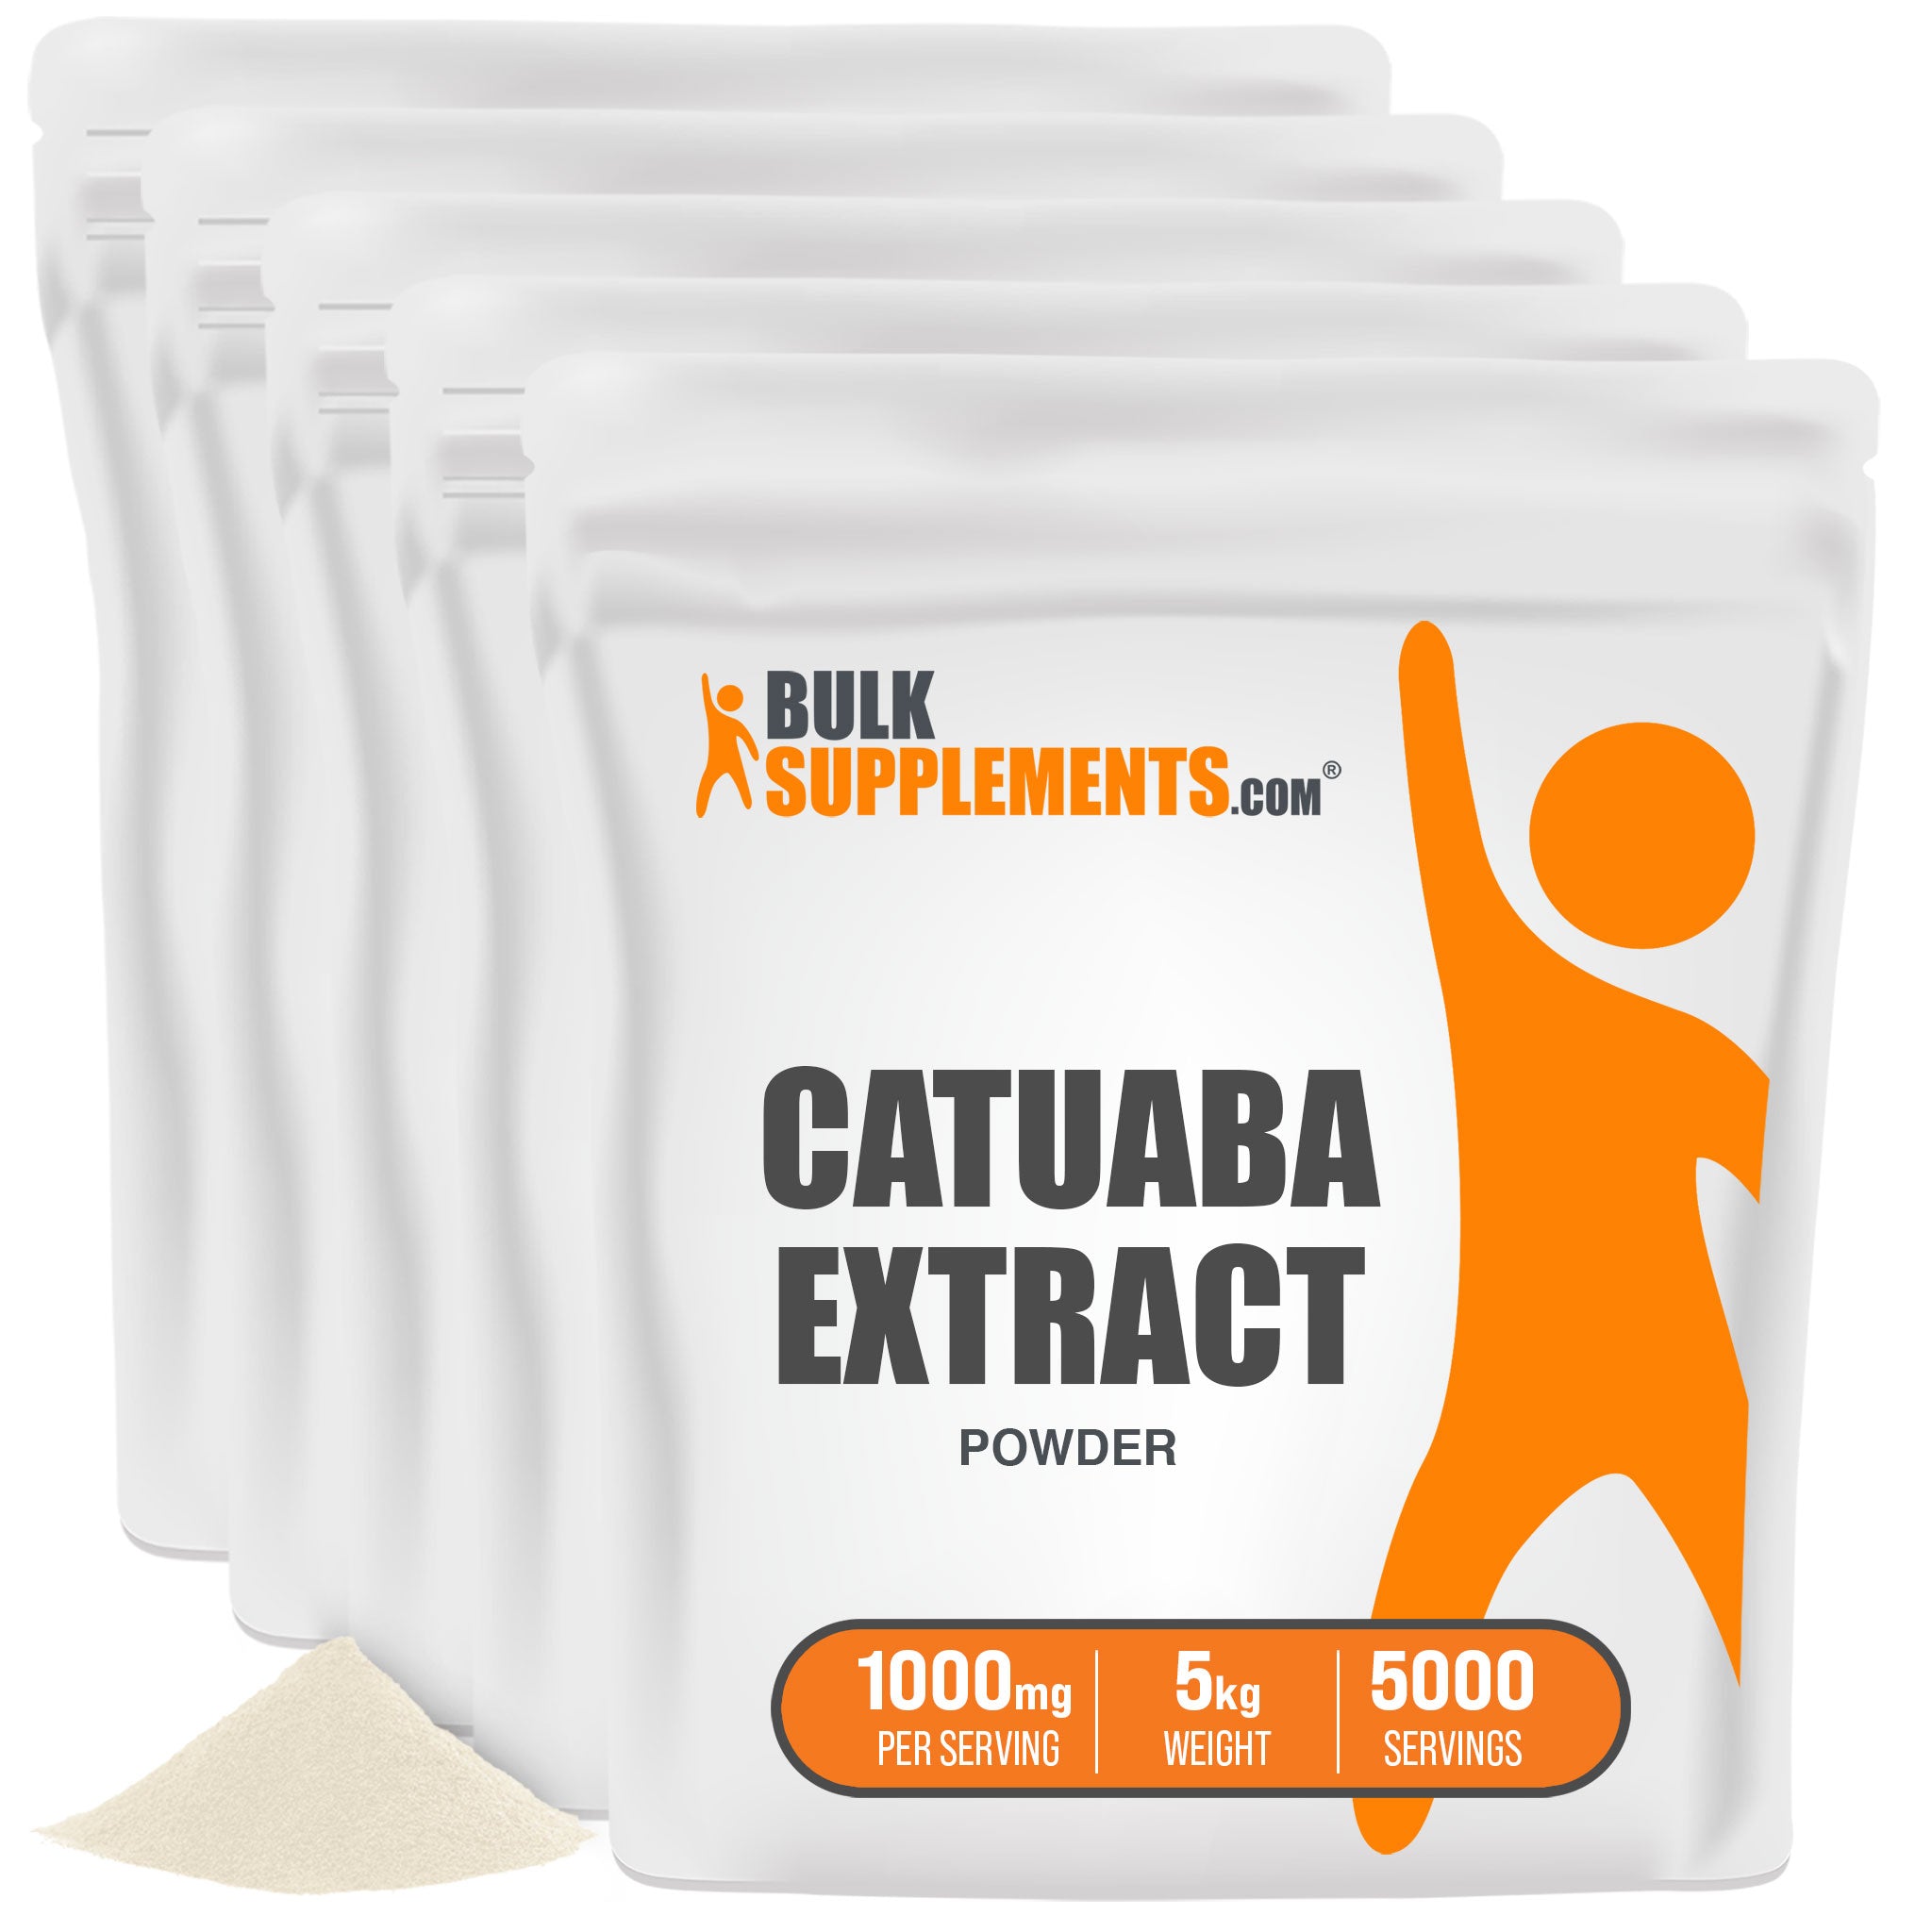 BulkSupplements Catuaba Extract Powder 5 Kilograms set of 5 bags